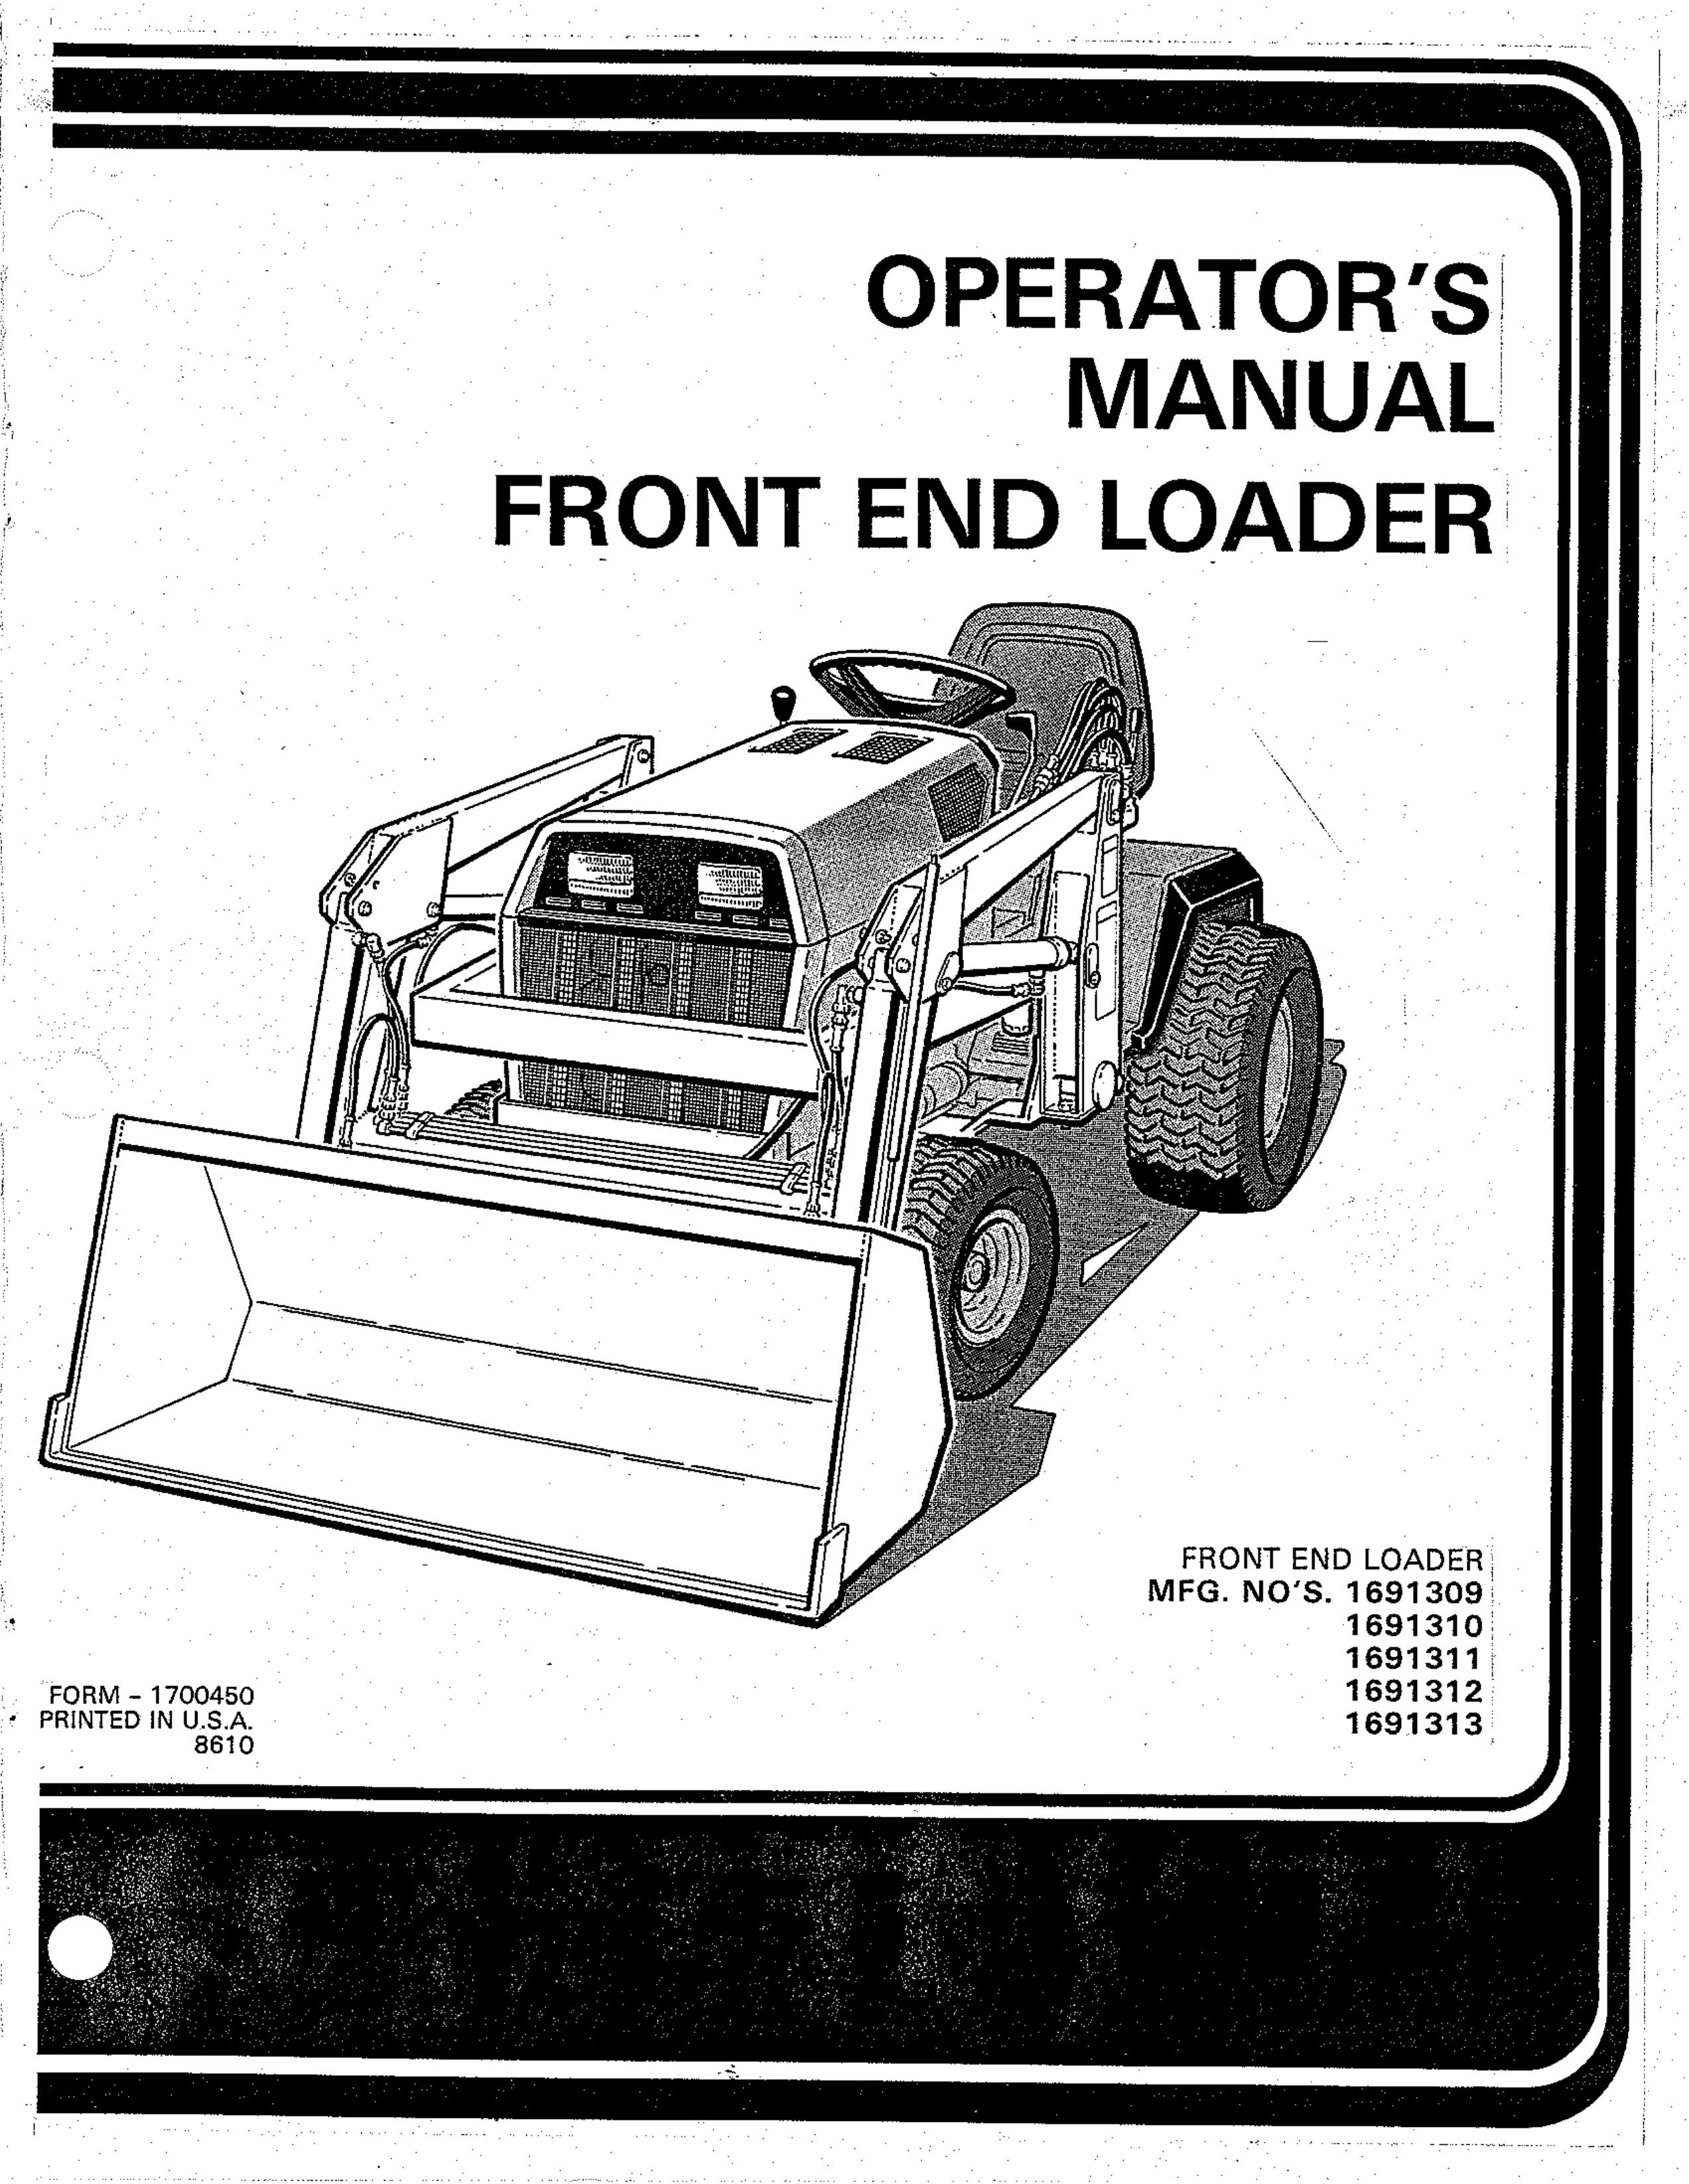 Snapper 1691311 Compact Loader User Manual